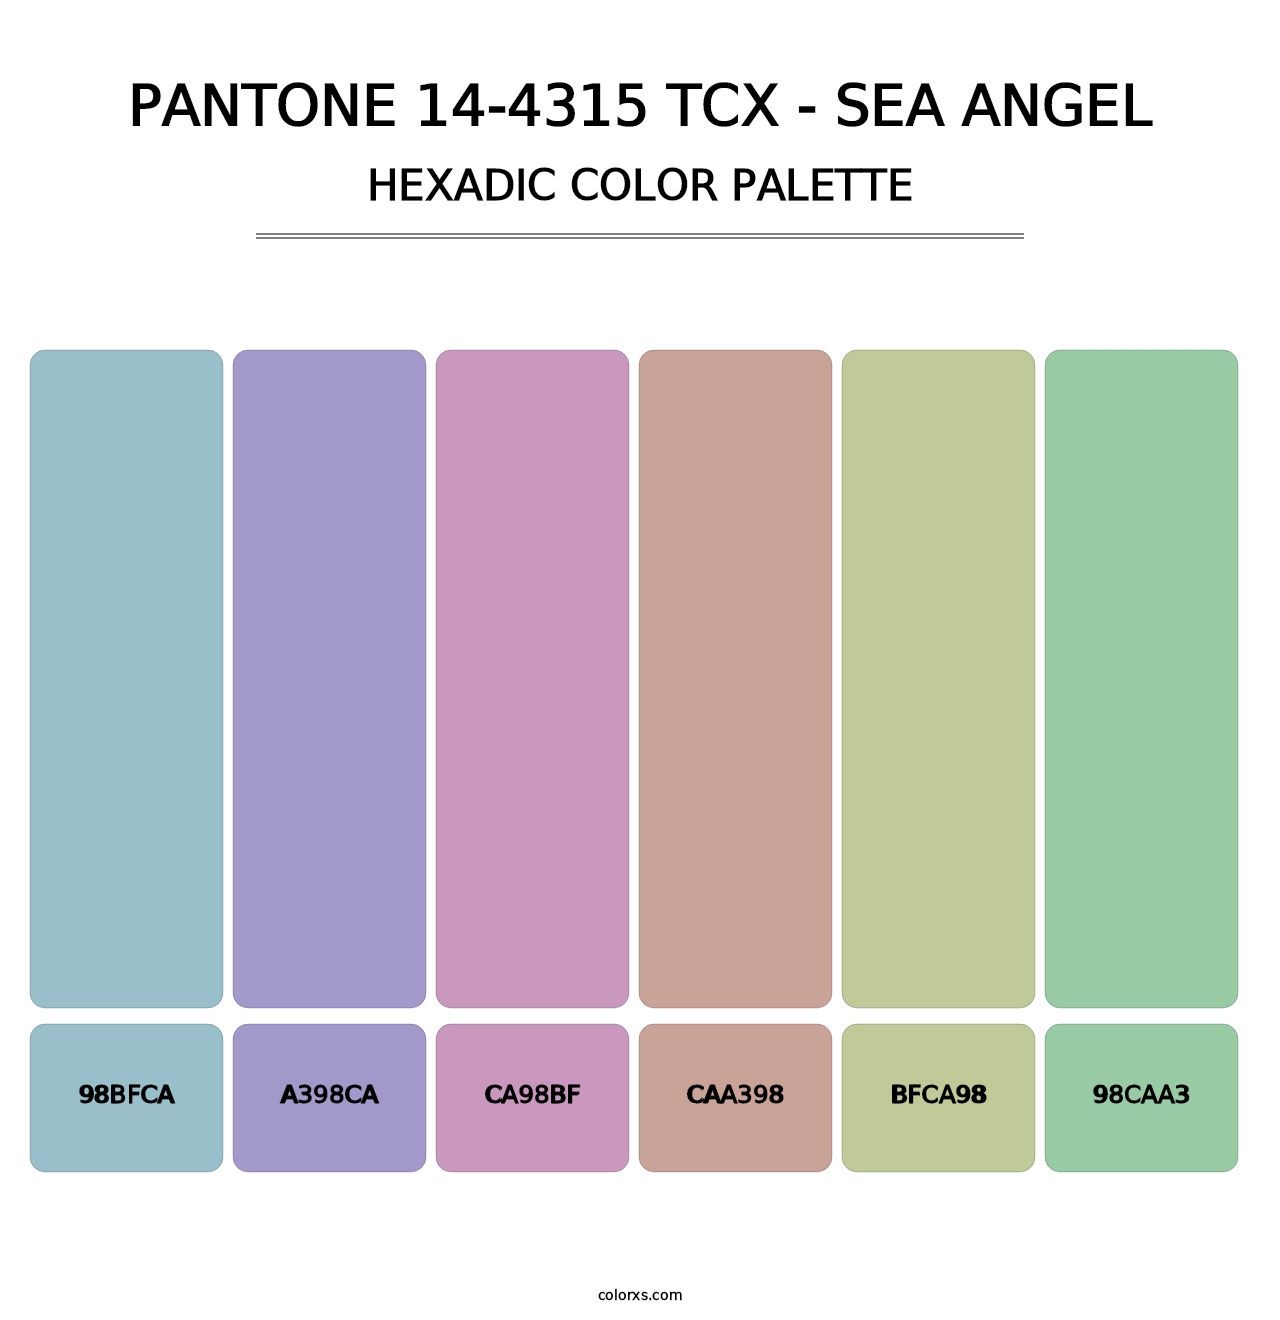 PANTONE 14-4315 TCX - Sea Angel - Hexadic Color Palette